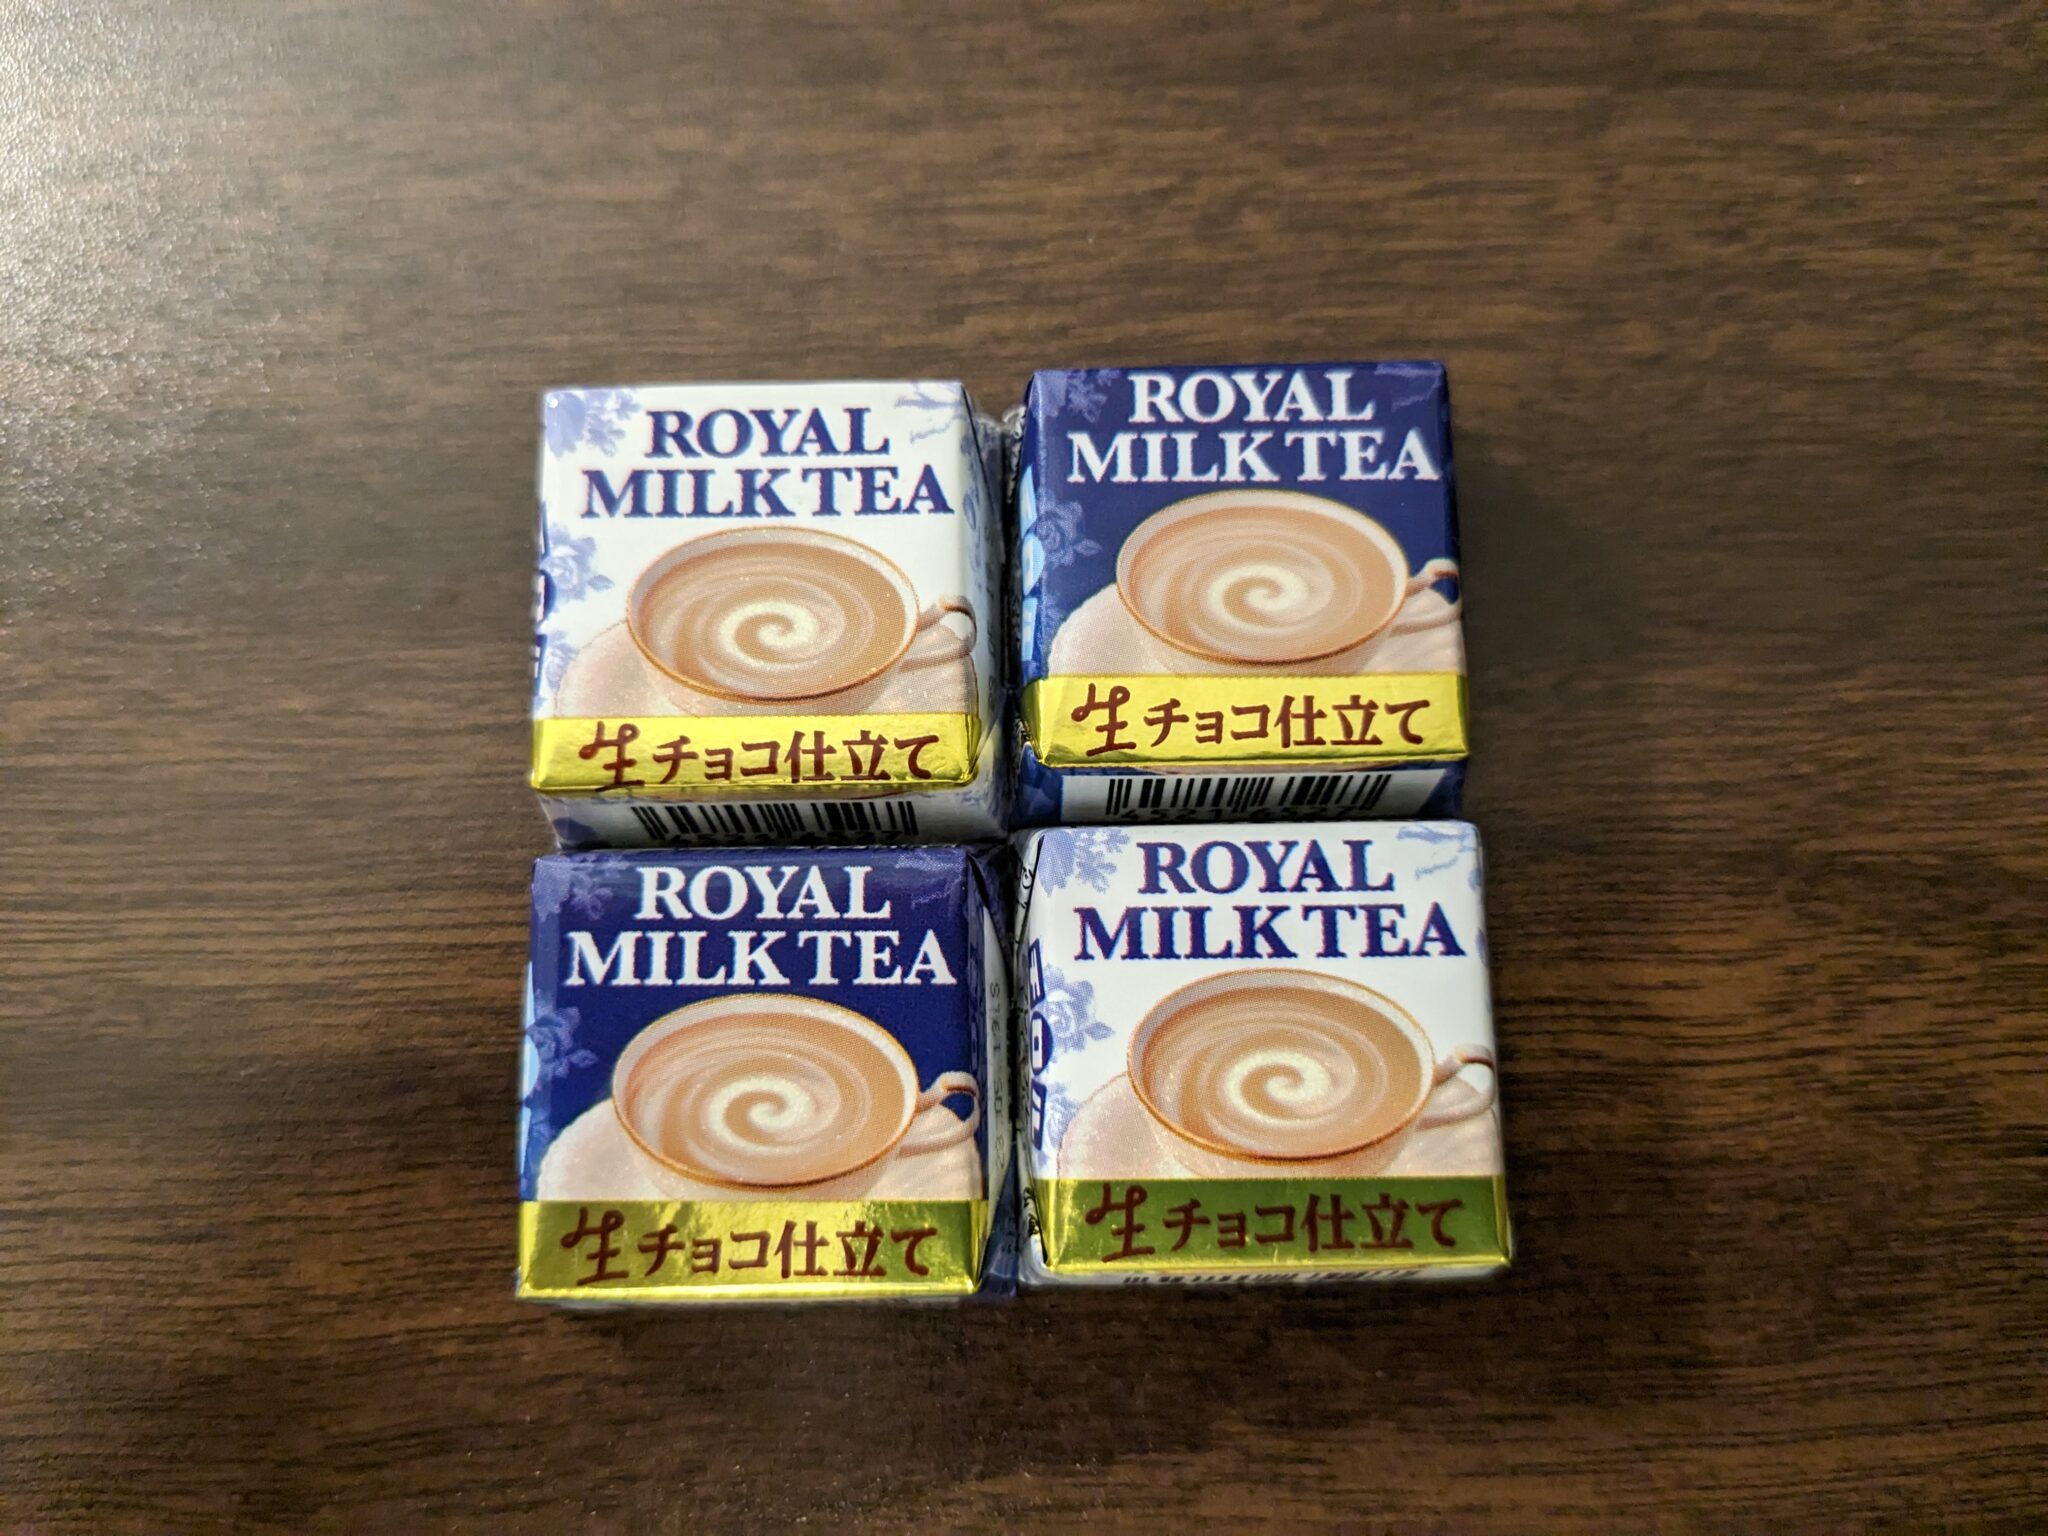 Tirol Chocolate – Royal Milk Tea